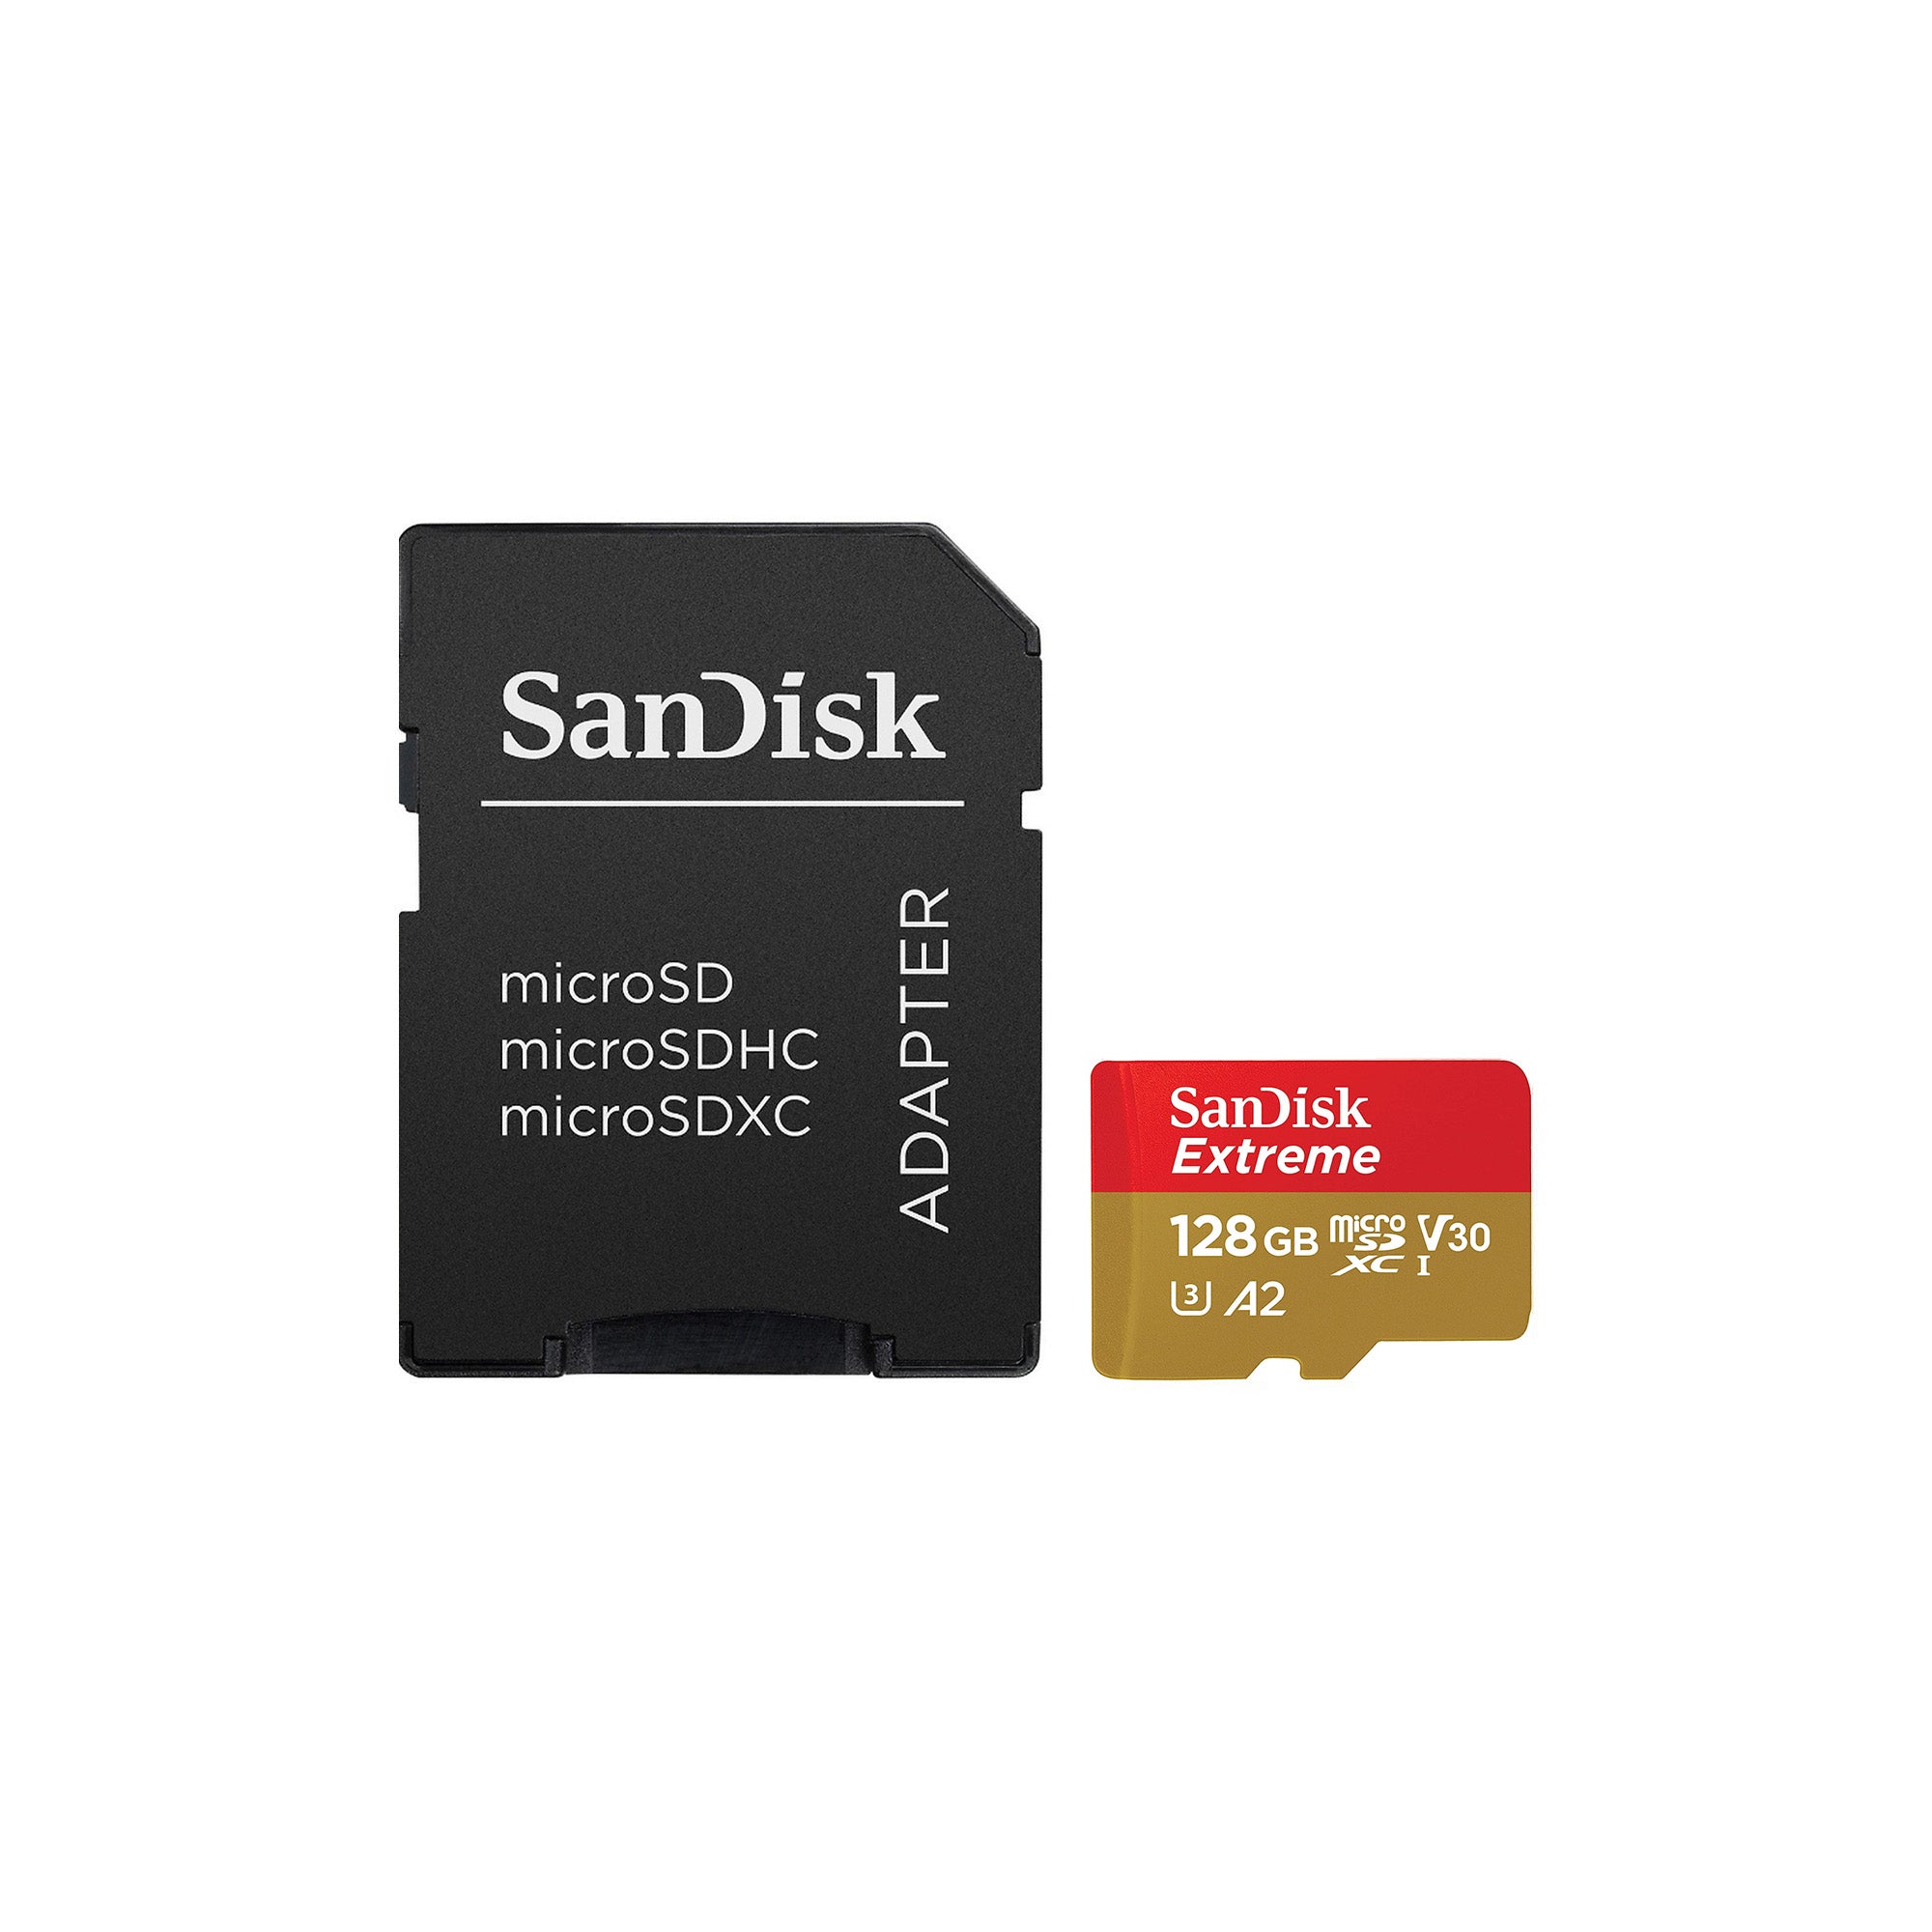 SanDisk Extreme 128GB microSDXC Memory Card - 10 Years Warranty